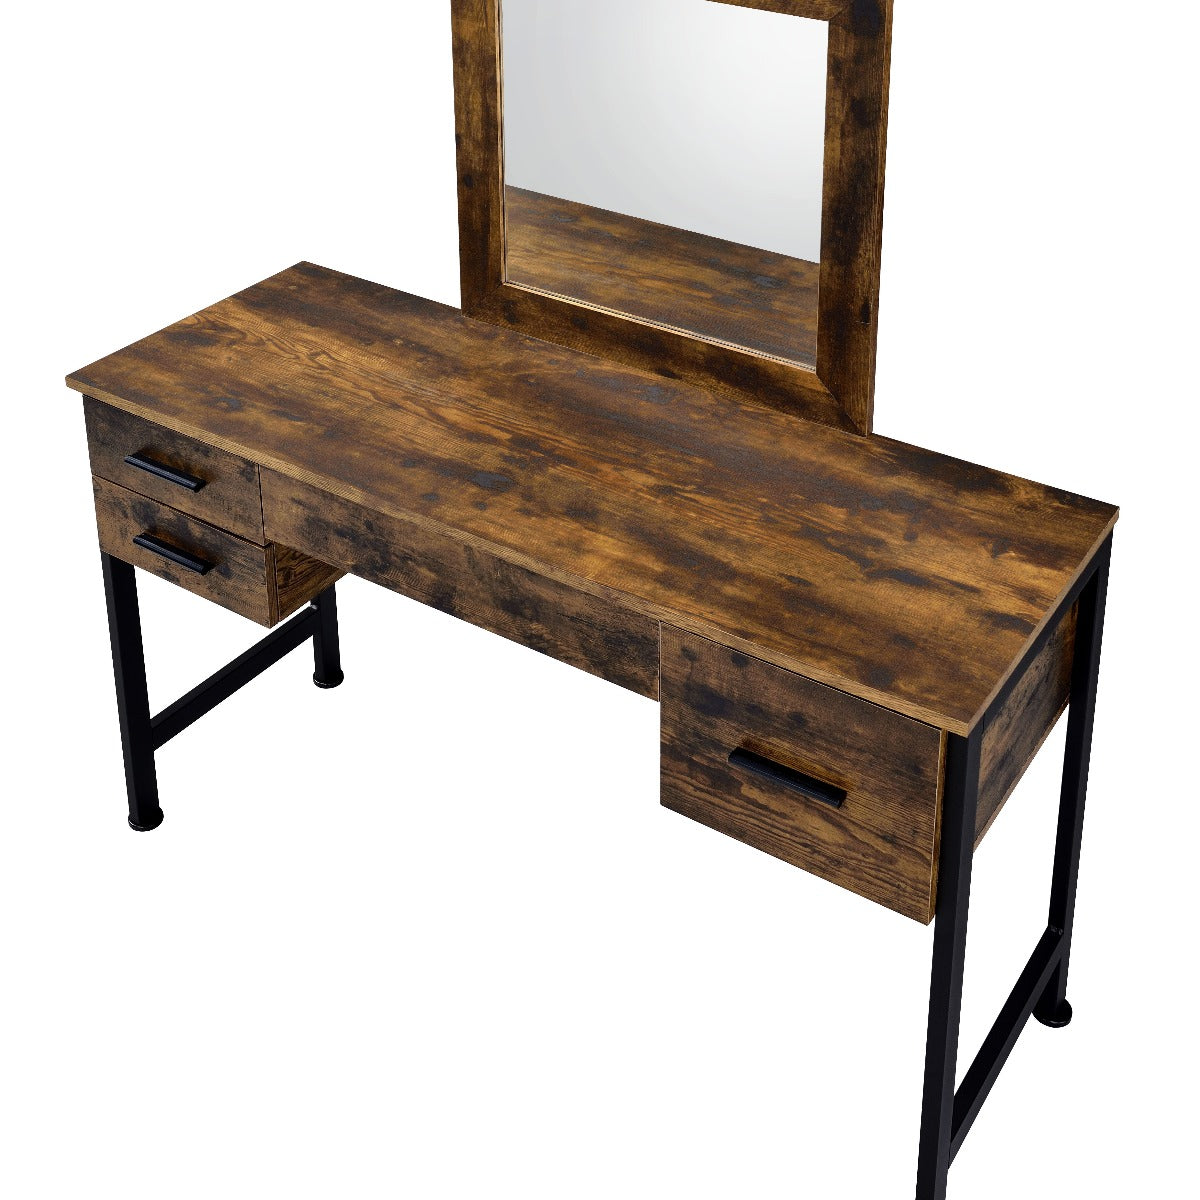 Juvanth Vanity Desk + Mirror 24267